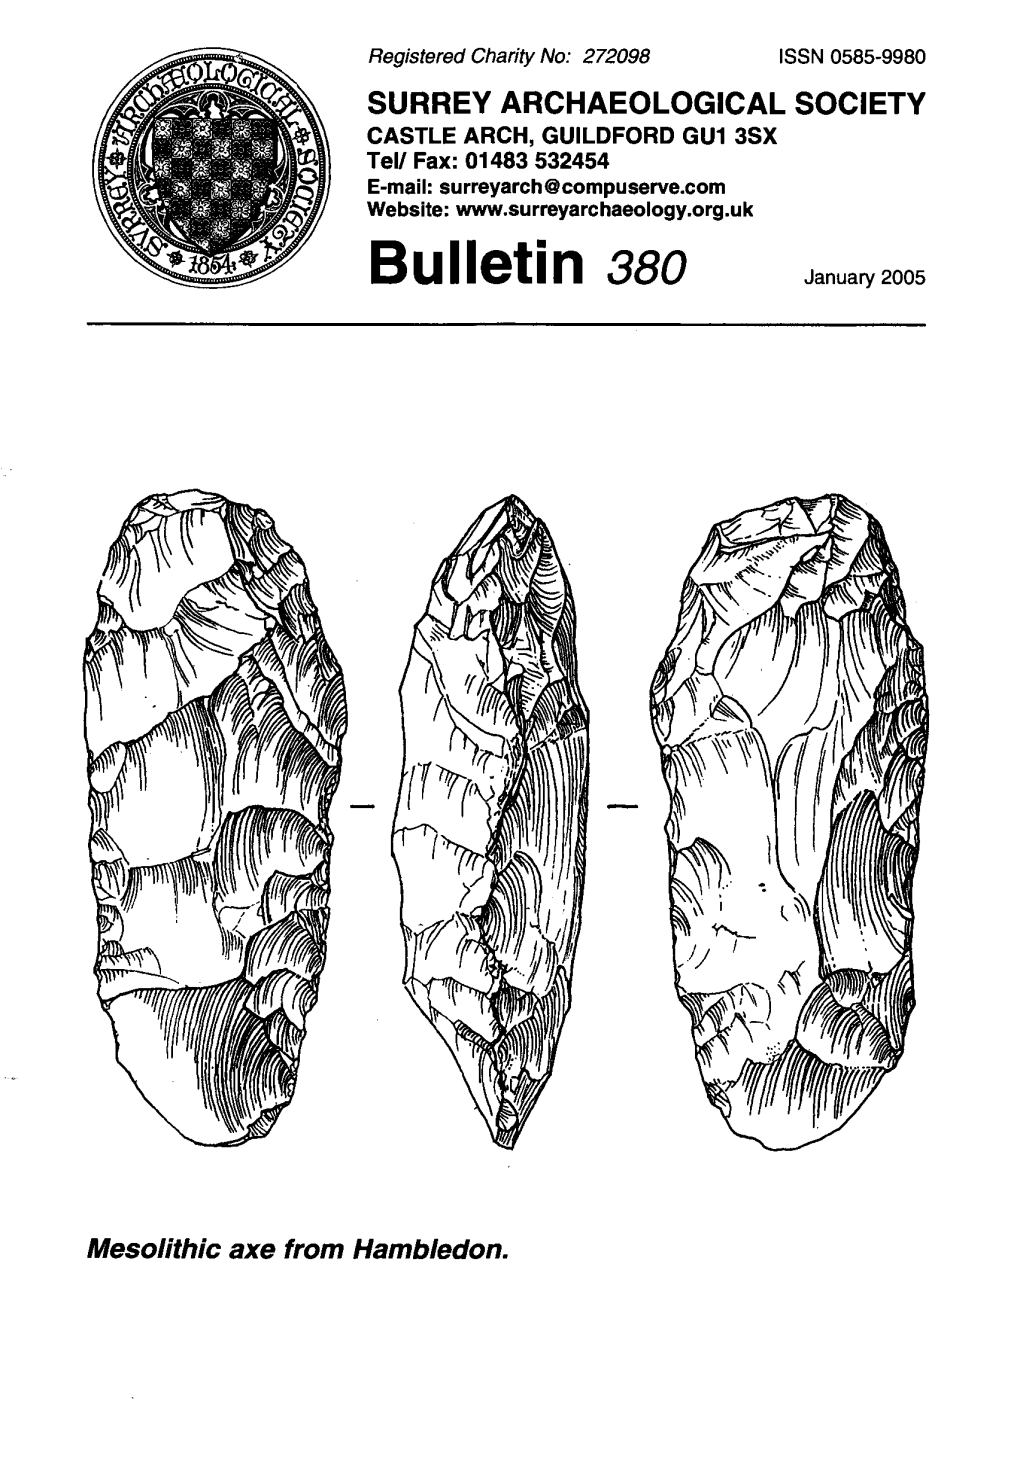 Bulletin 380 January 2005